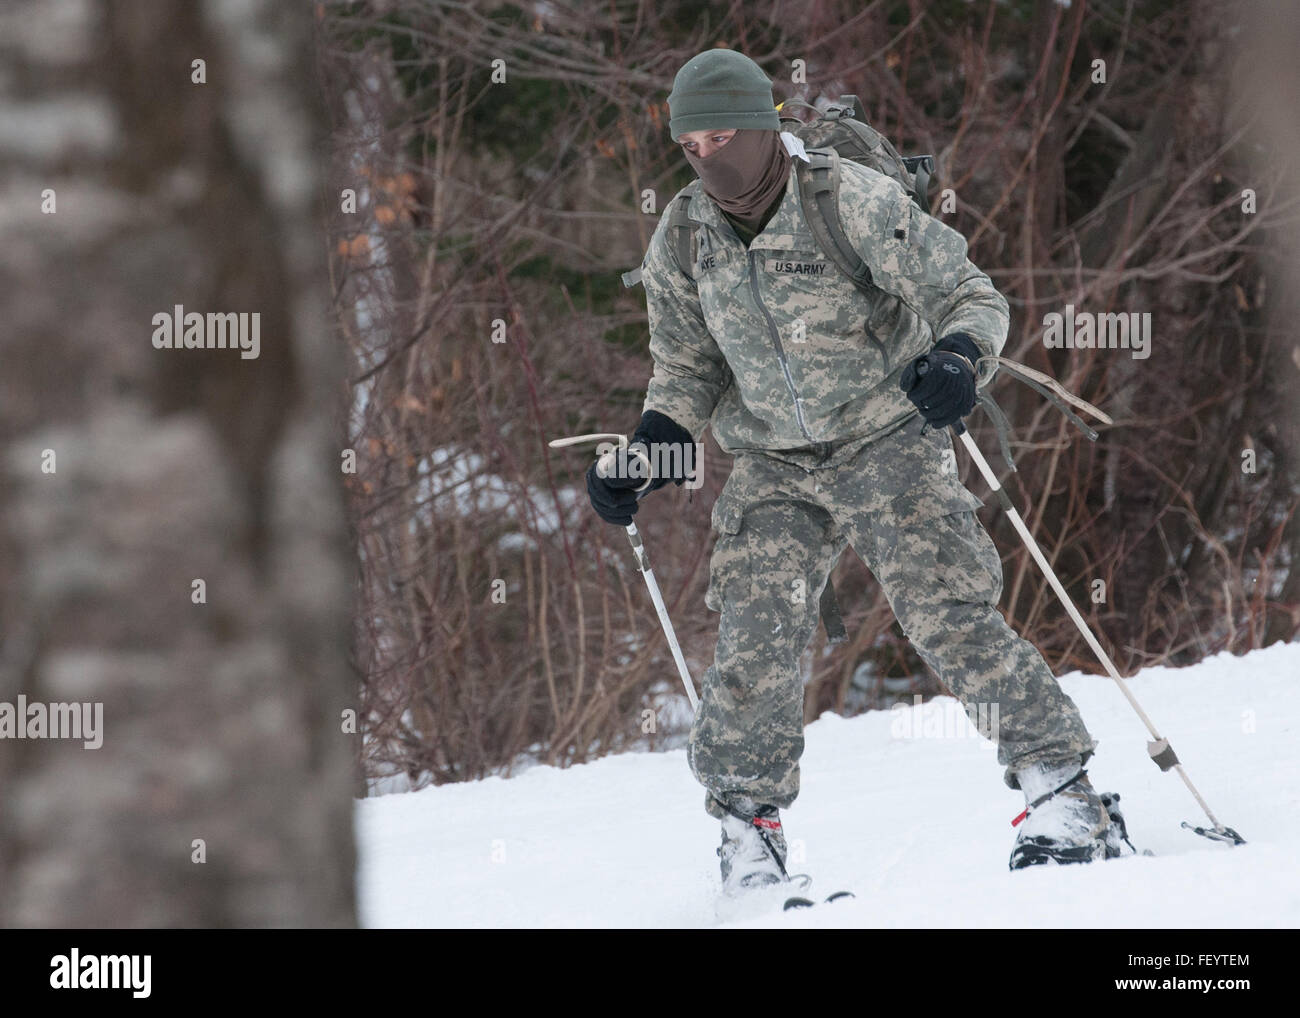 Greek Special Forces Mountain Ski Snow Patrol Warfare Training Center Patch